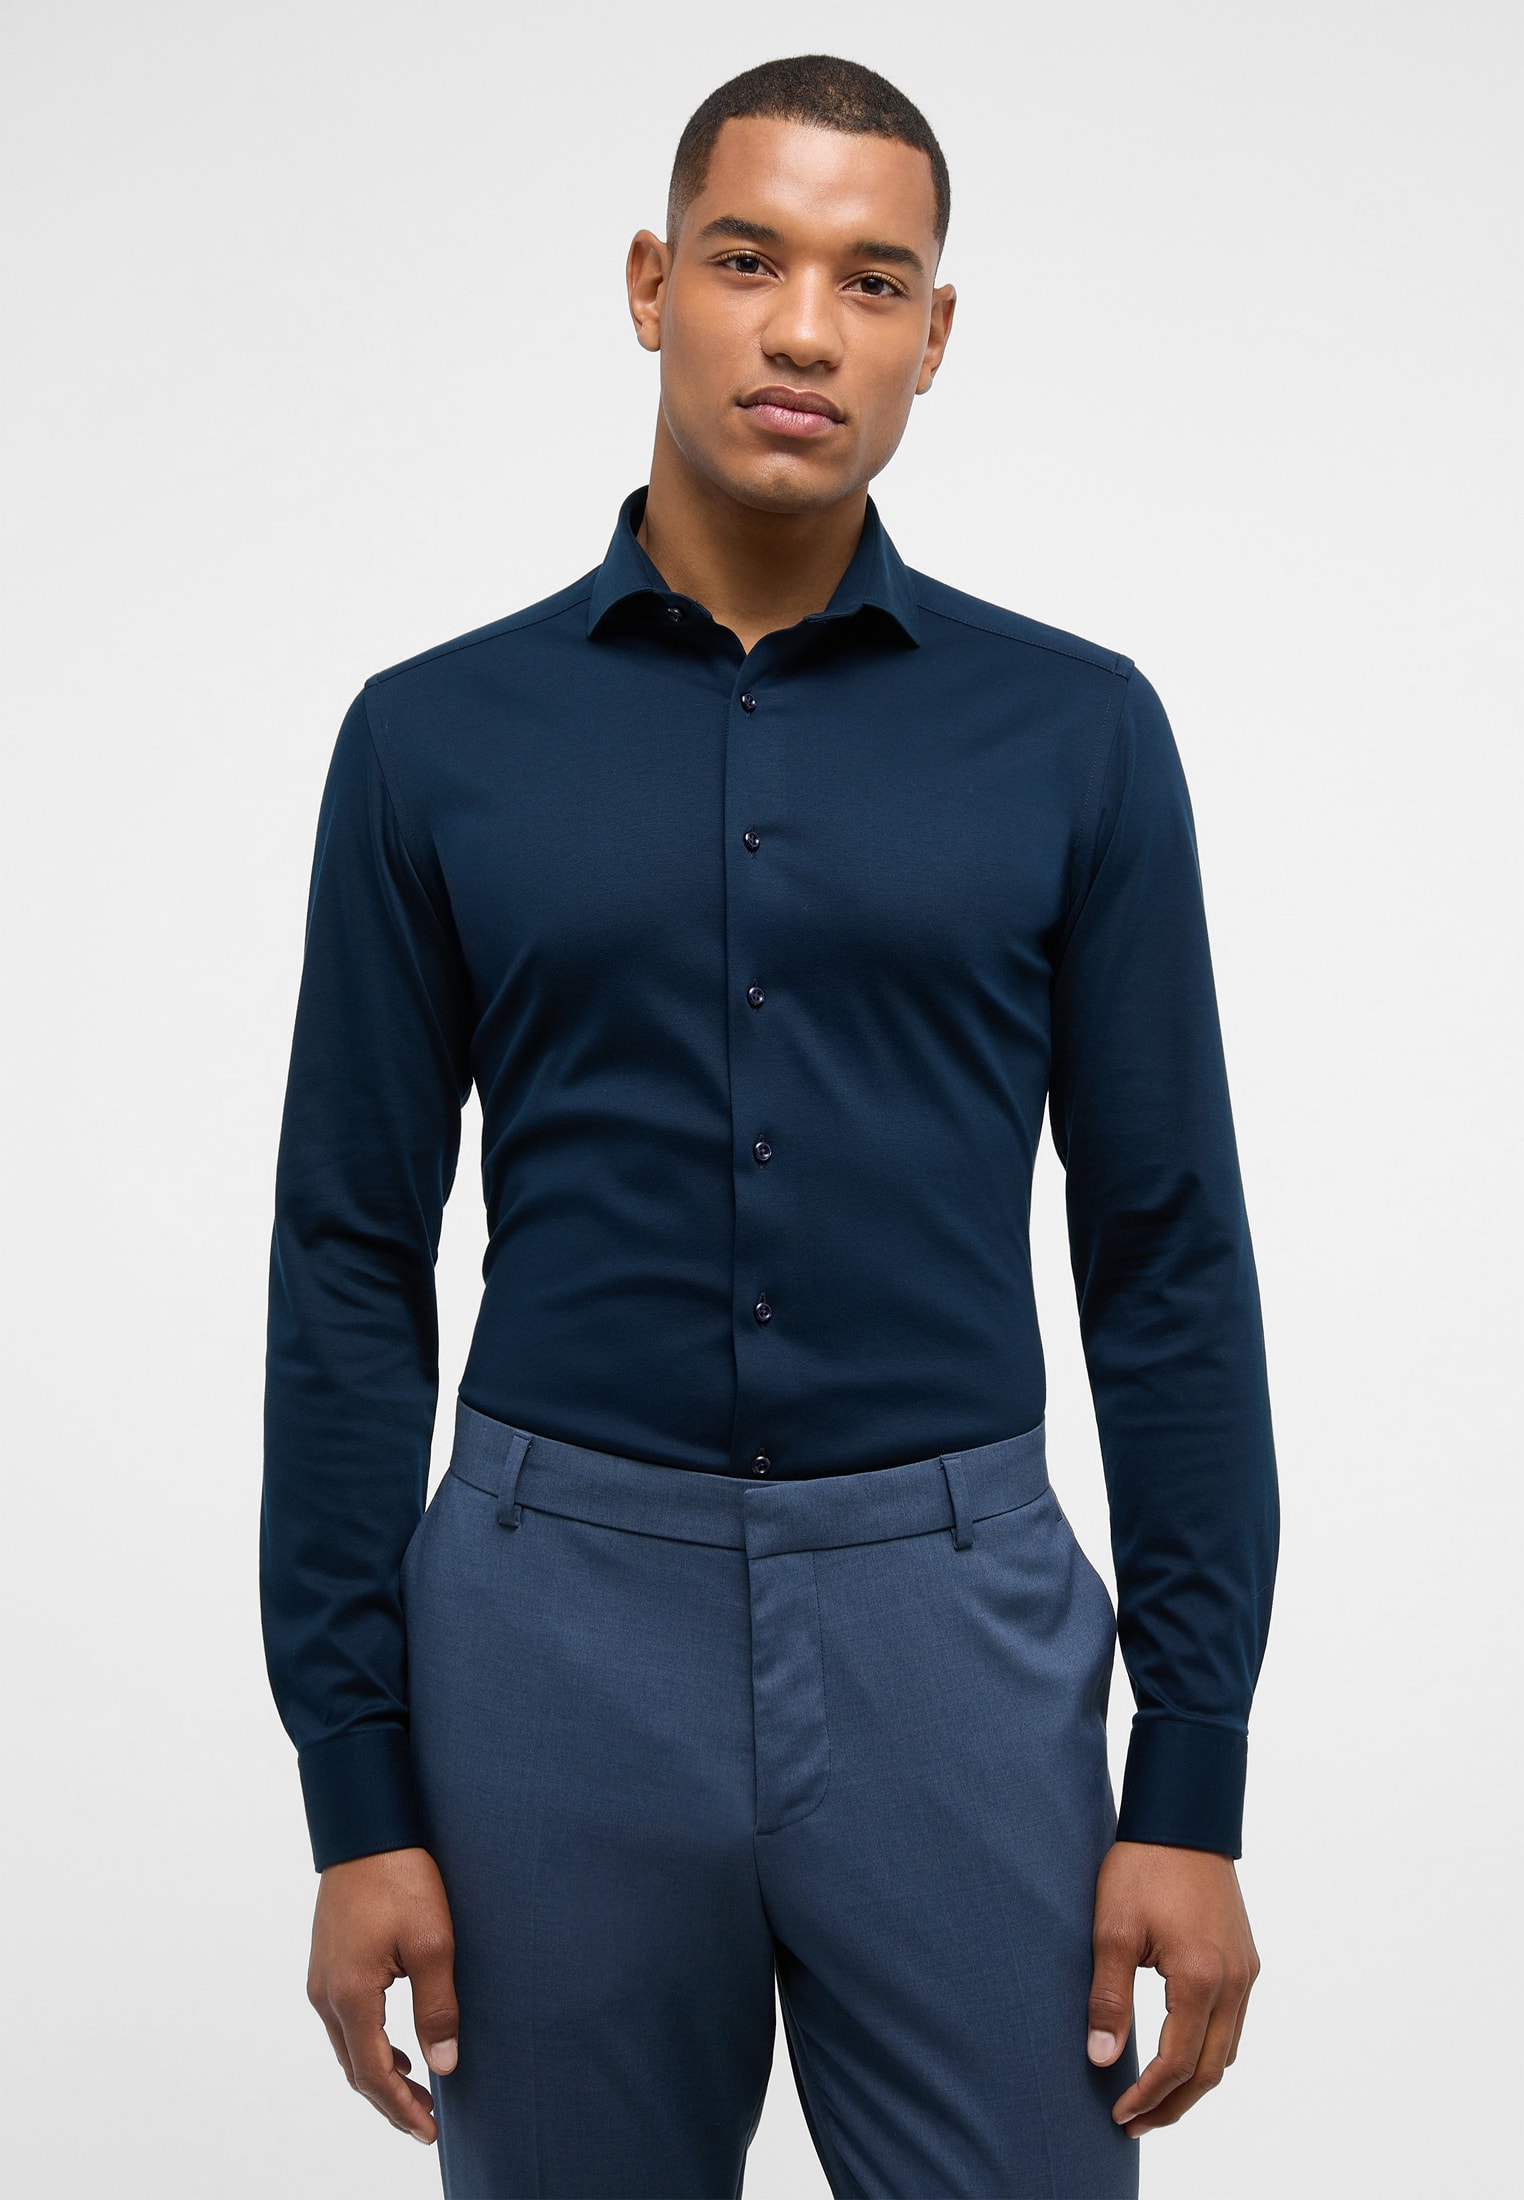 SLIM FIT Jersey Shirt in dunkelblau unifarben | dunkelblau | 40 | Langarm |  1SH00378-01-81-40-1/1